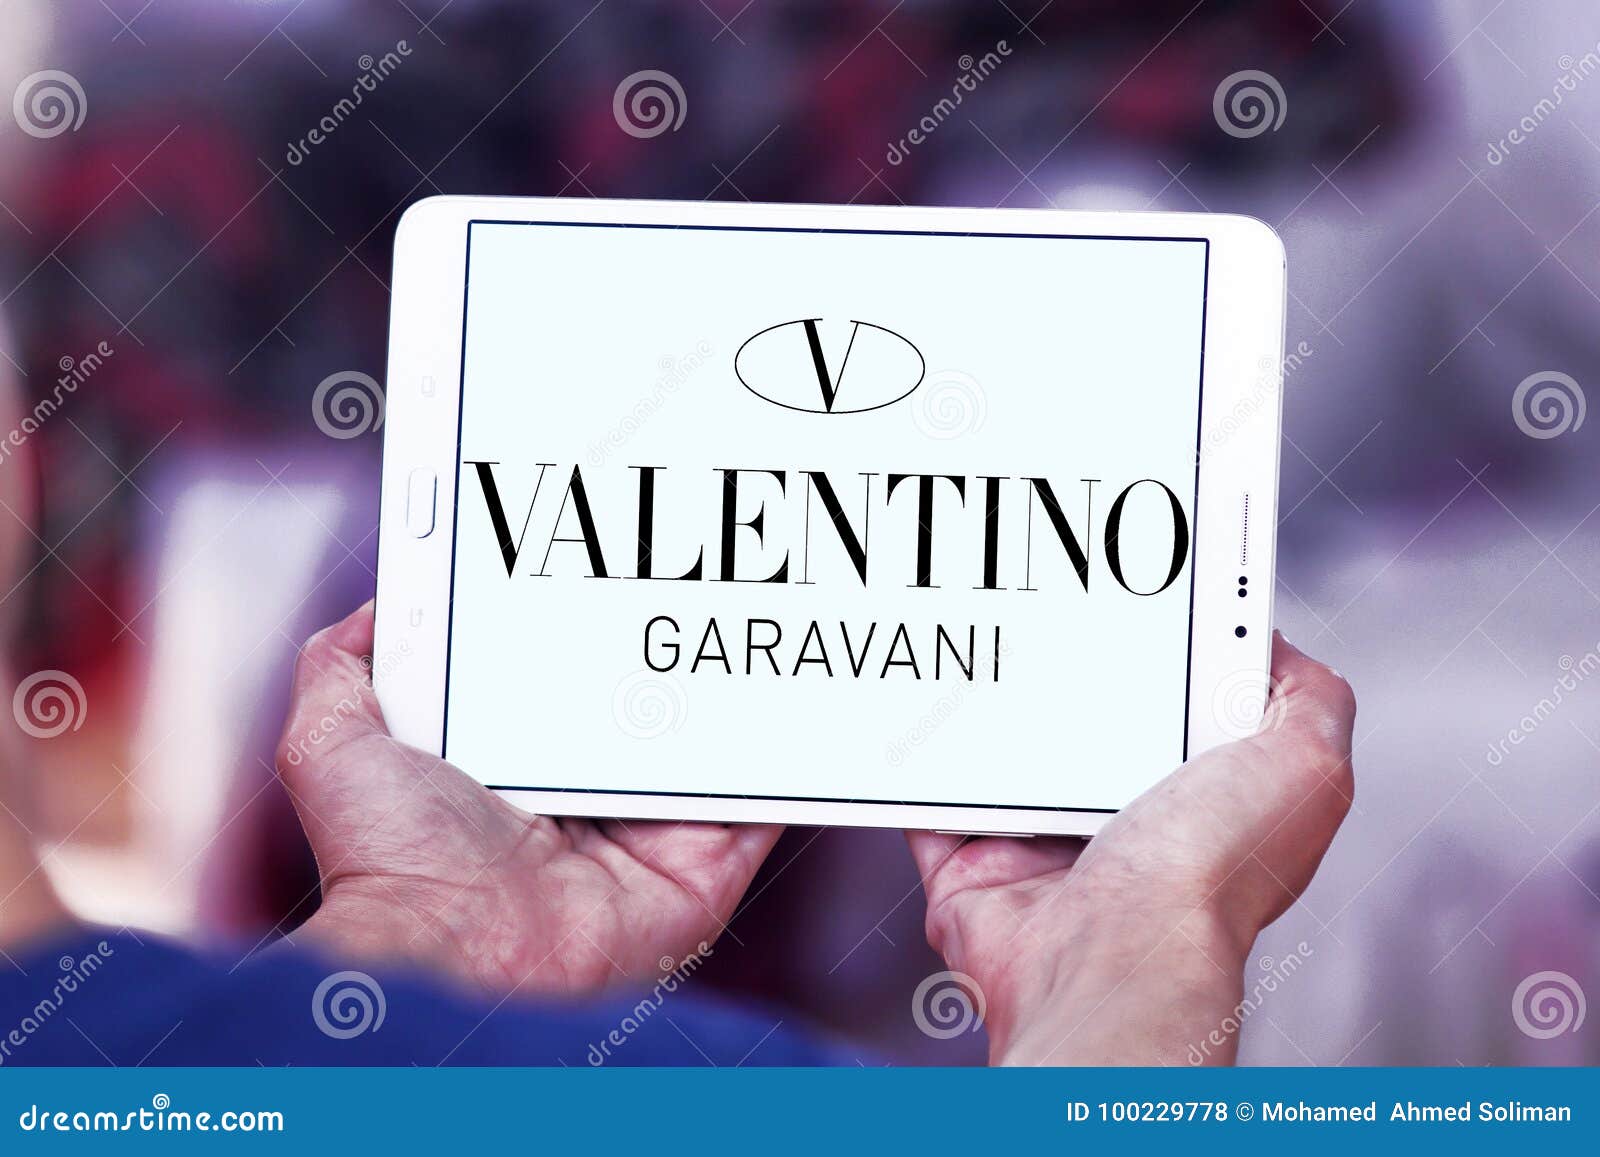 Garavani Brand Logo Photo - Image of brands, clothing: 100229778